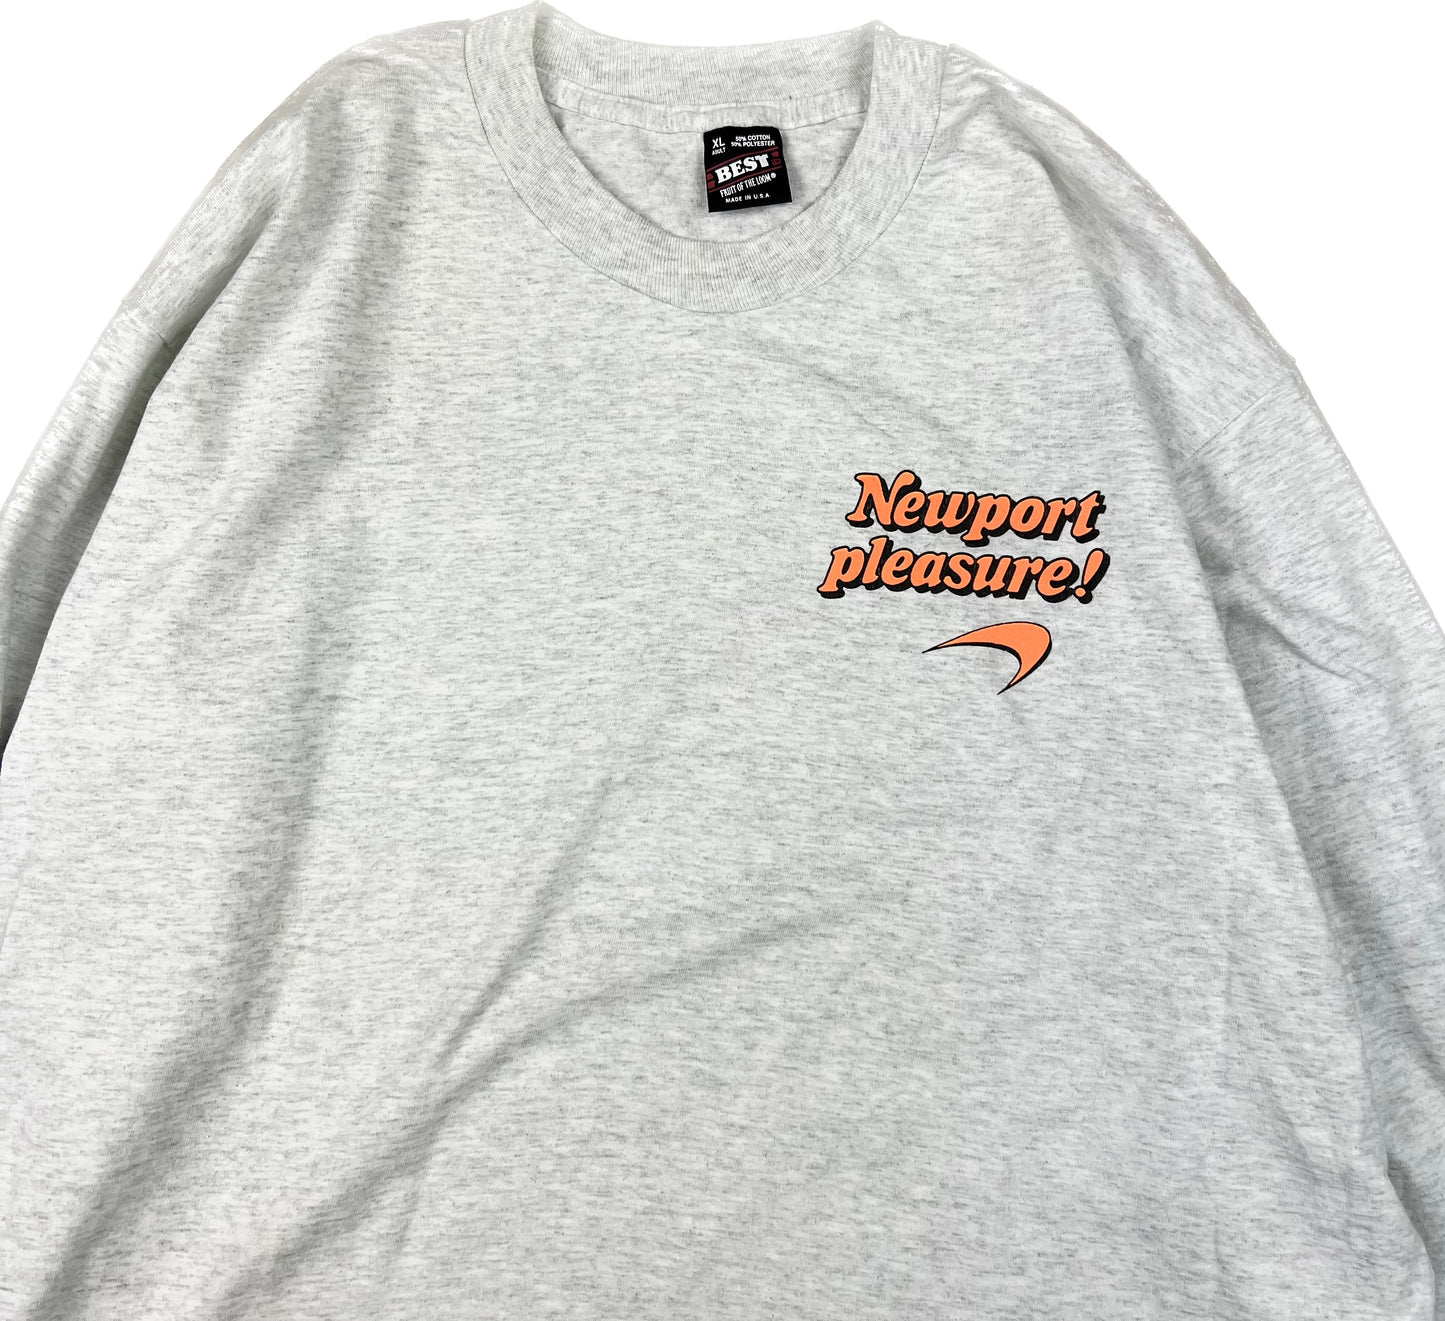 Vintage Newport Pleasure Long Sleeve T-Shirt // XL